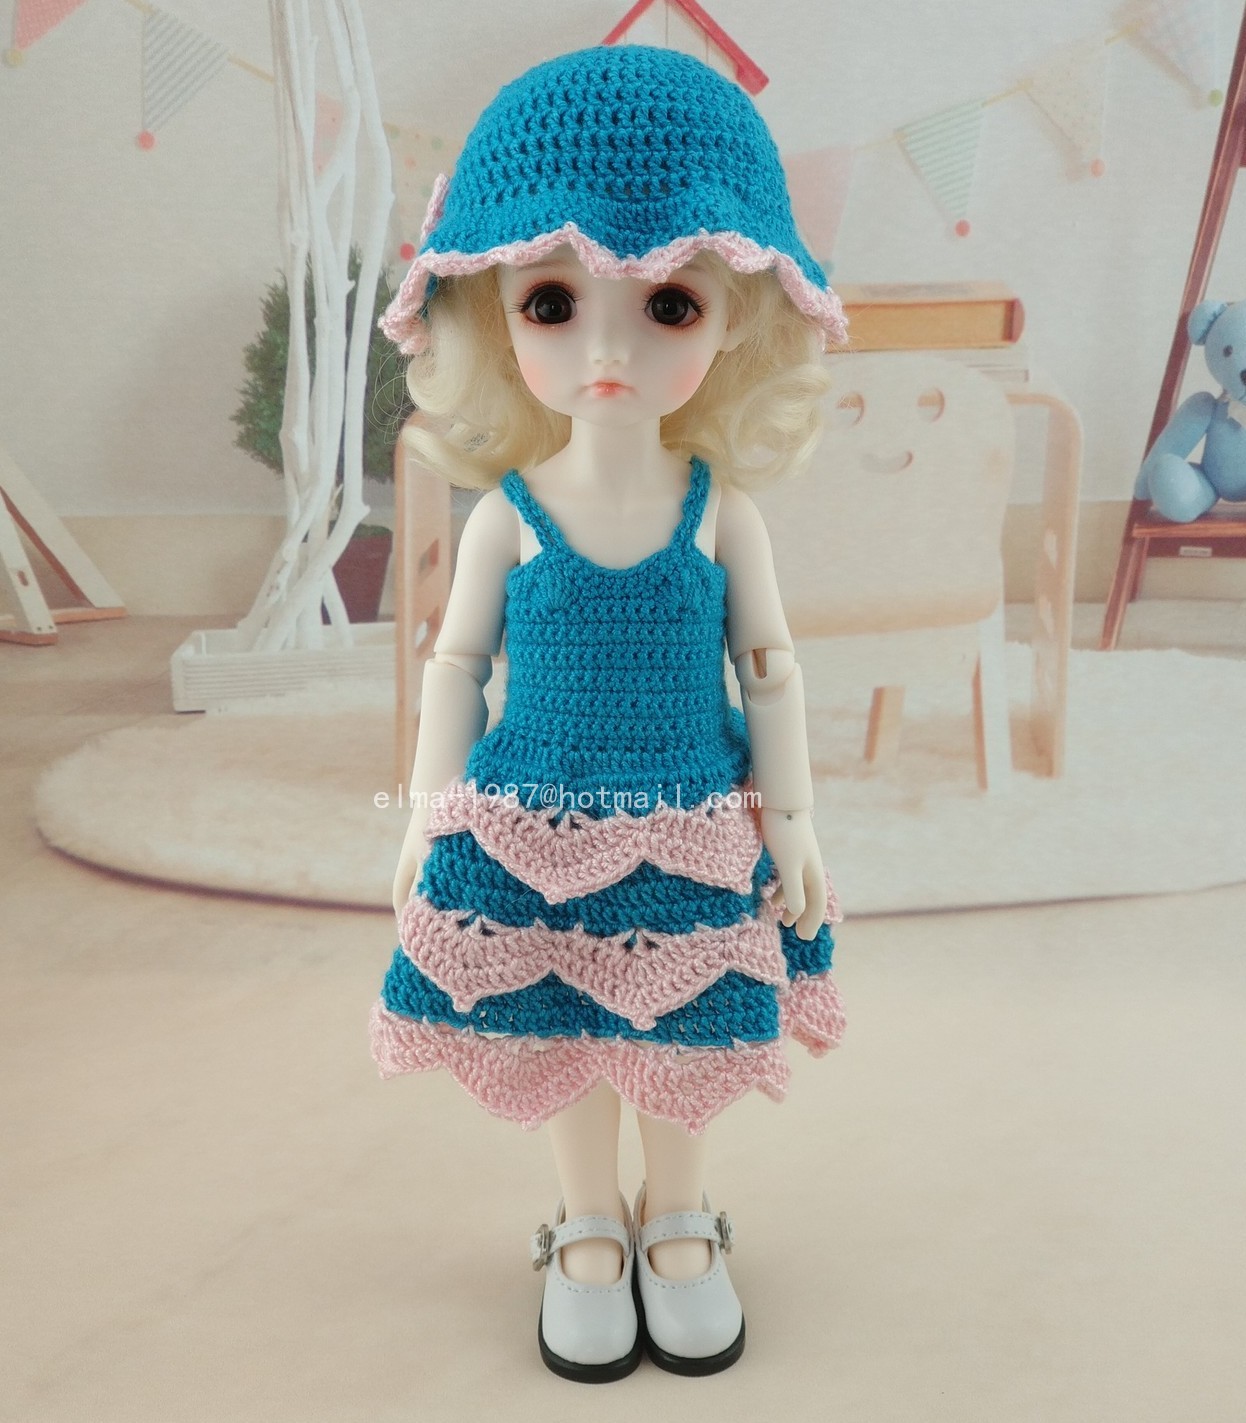 Blue crochet dress set for 1/6 size BJD - Click Image to Close